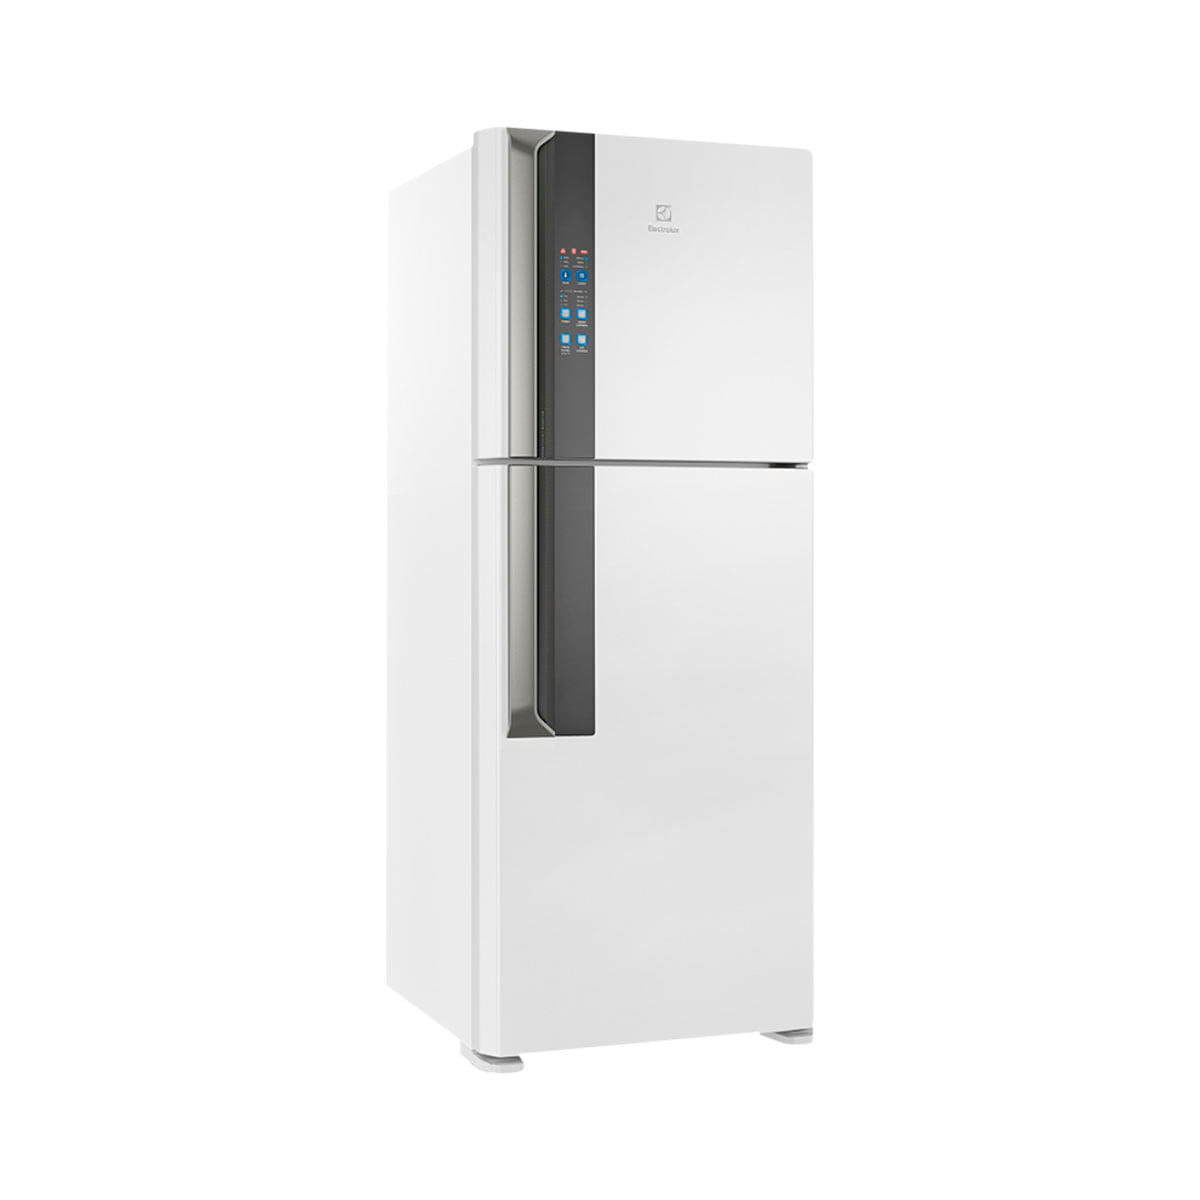 Geladeira Electrolux Degelo Automático Top Freezer 2 Portas Inverter If55 431 Litros Branco 220V